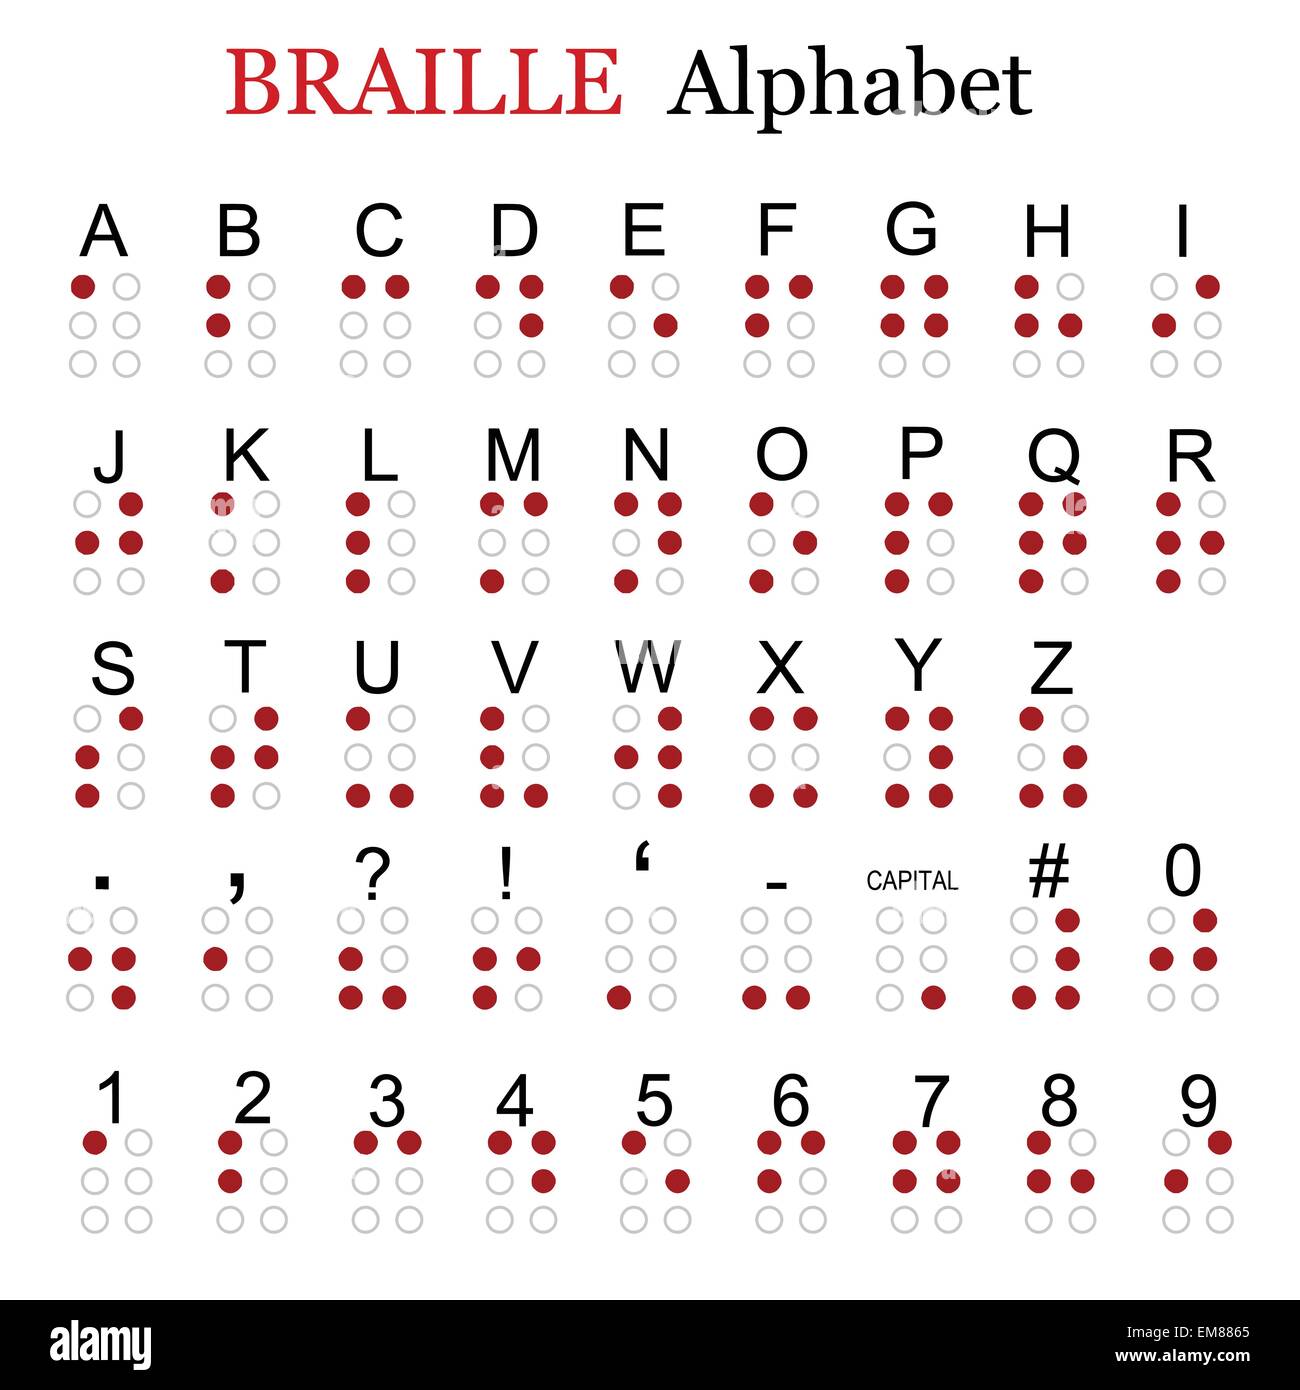 draw symbols ofBraille script 